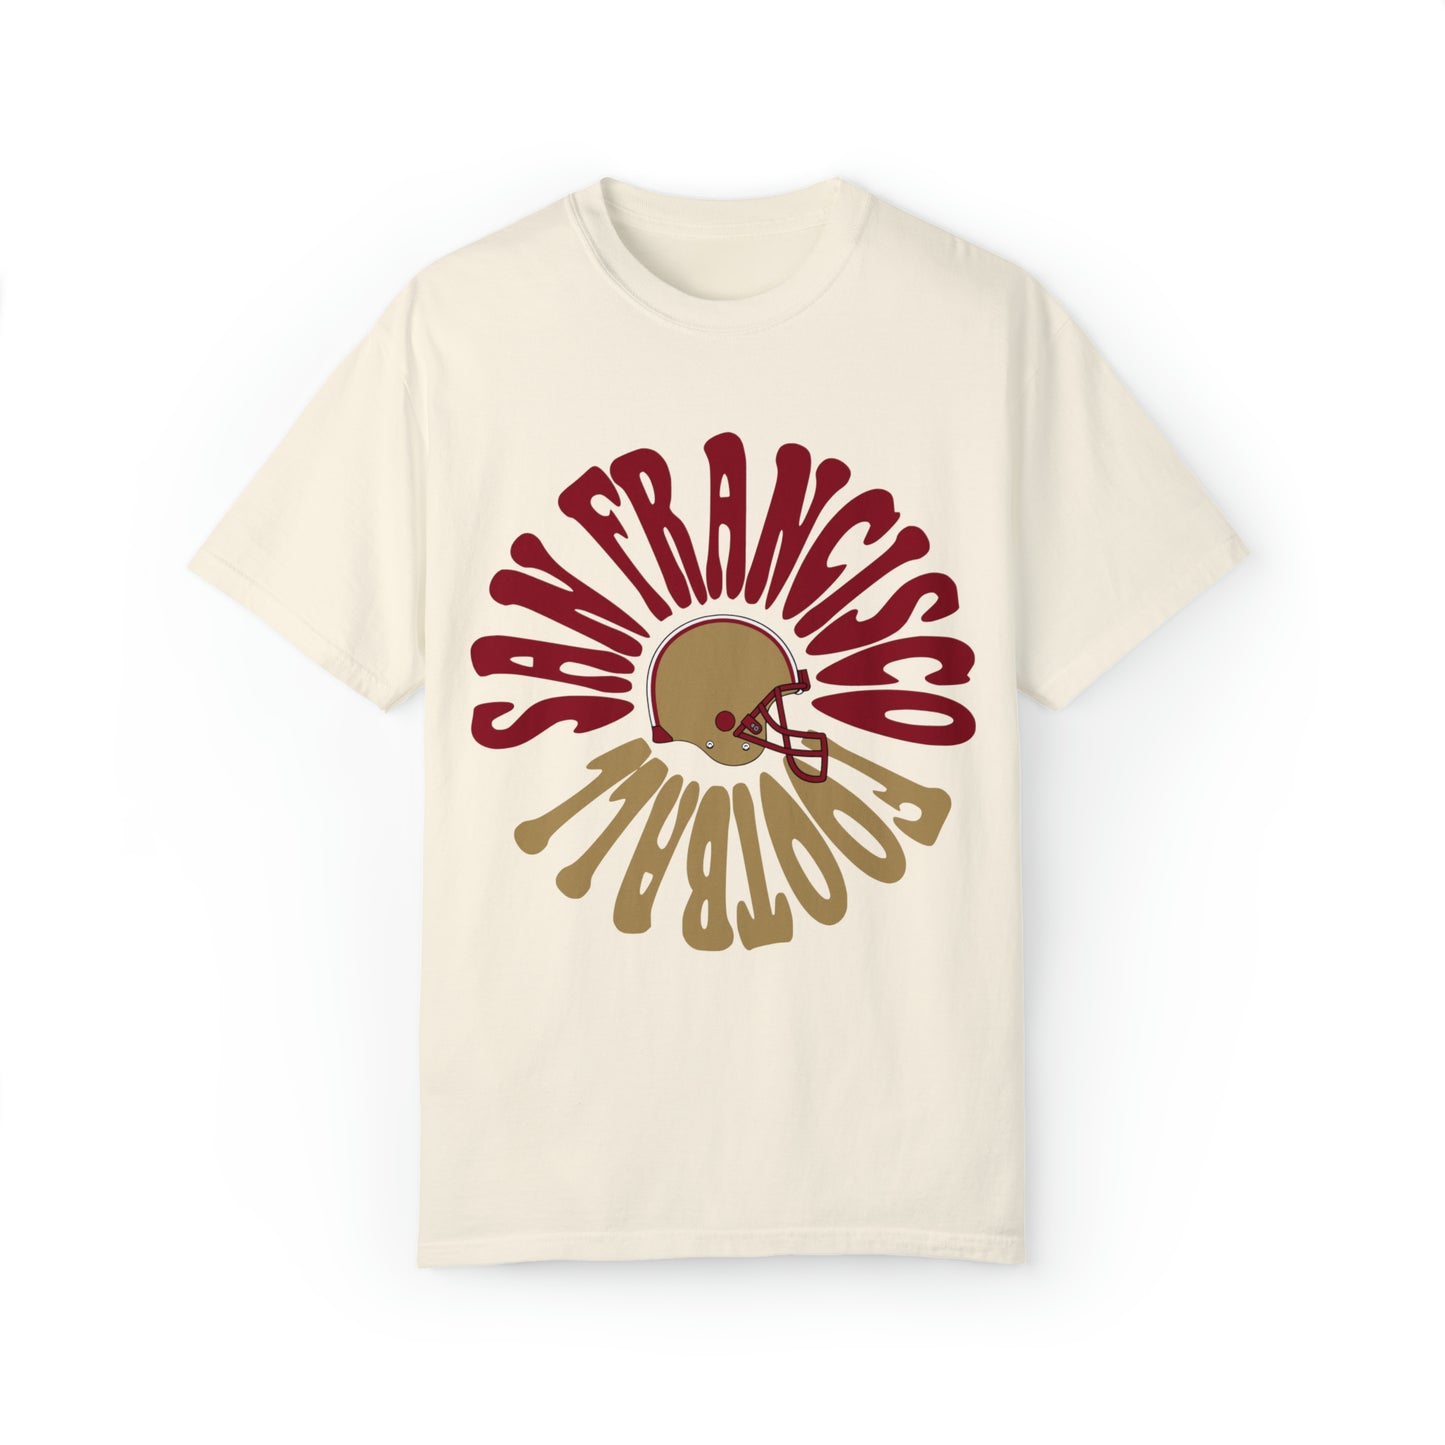 Comfort Colors Hippy San Francisco 49ERS NFL Football Tee - Short Sleeve T-Shirt Unisex Men's Women's Oversized Apparel - Design 2